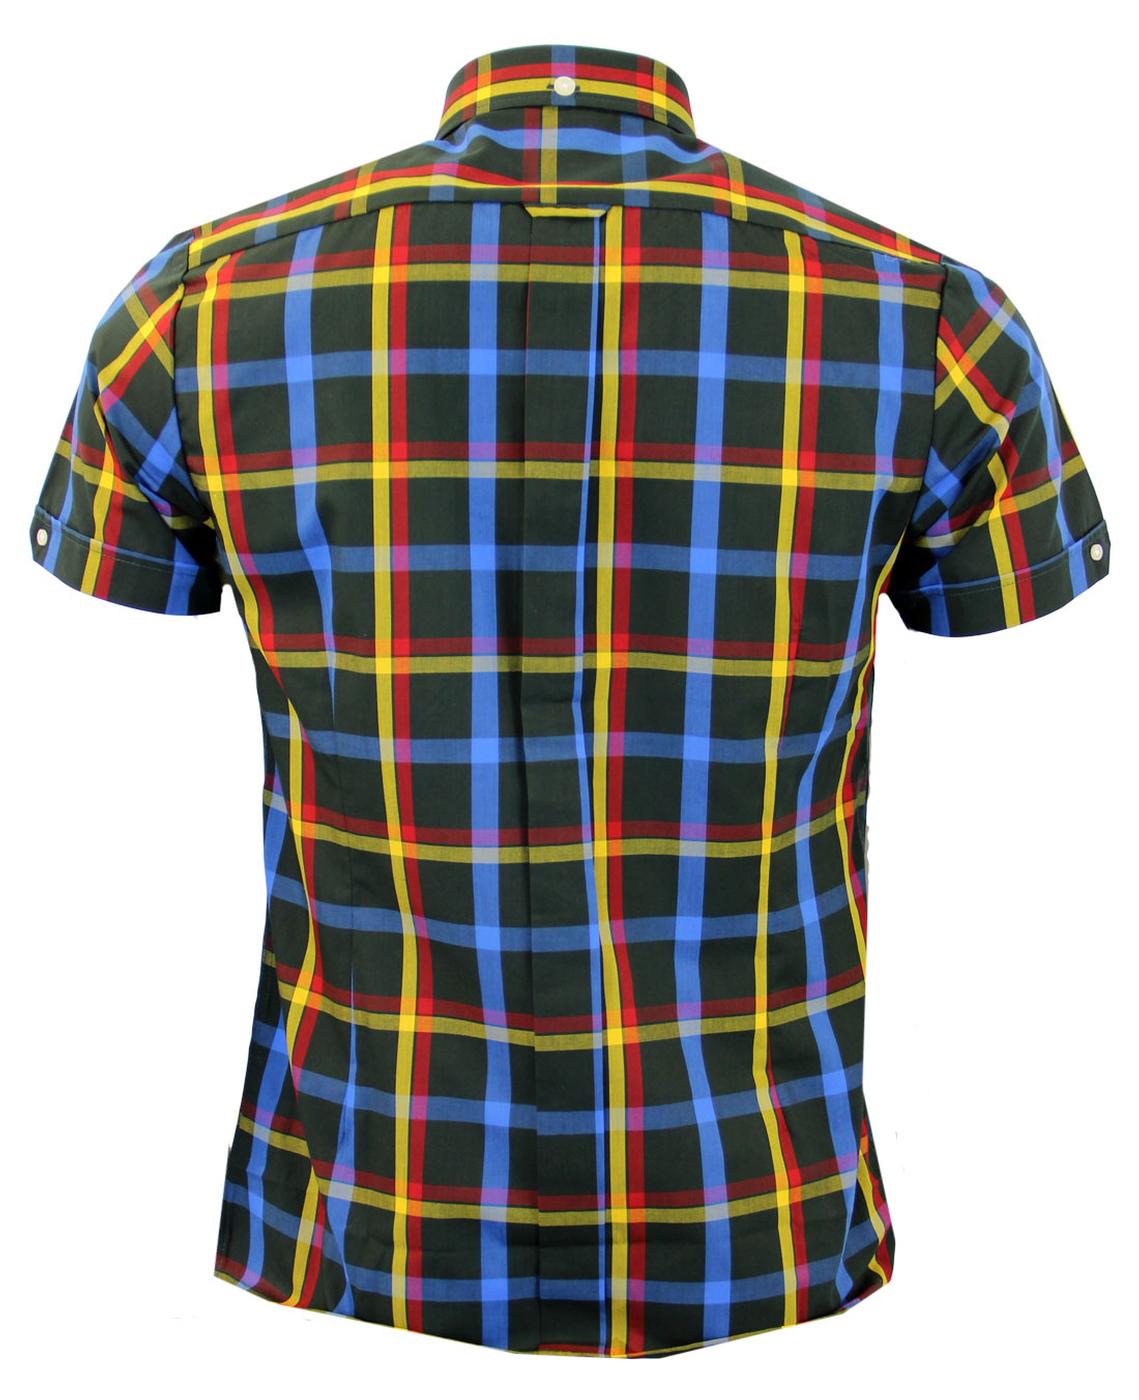 BRUTUS TRIMFIT Dr Martens Retro Mod Tartan Shirt Blue/Red/Yellow